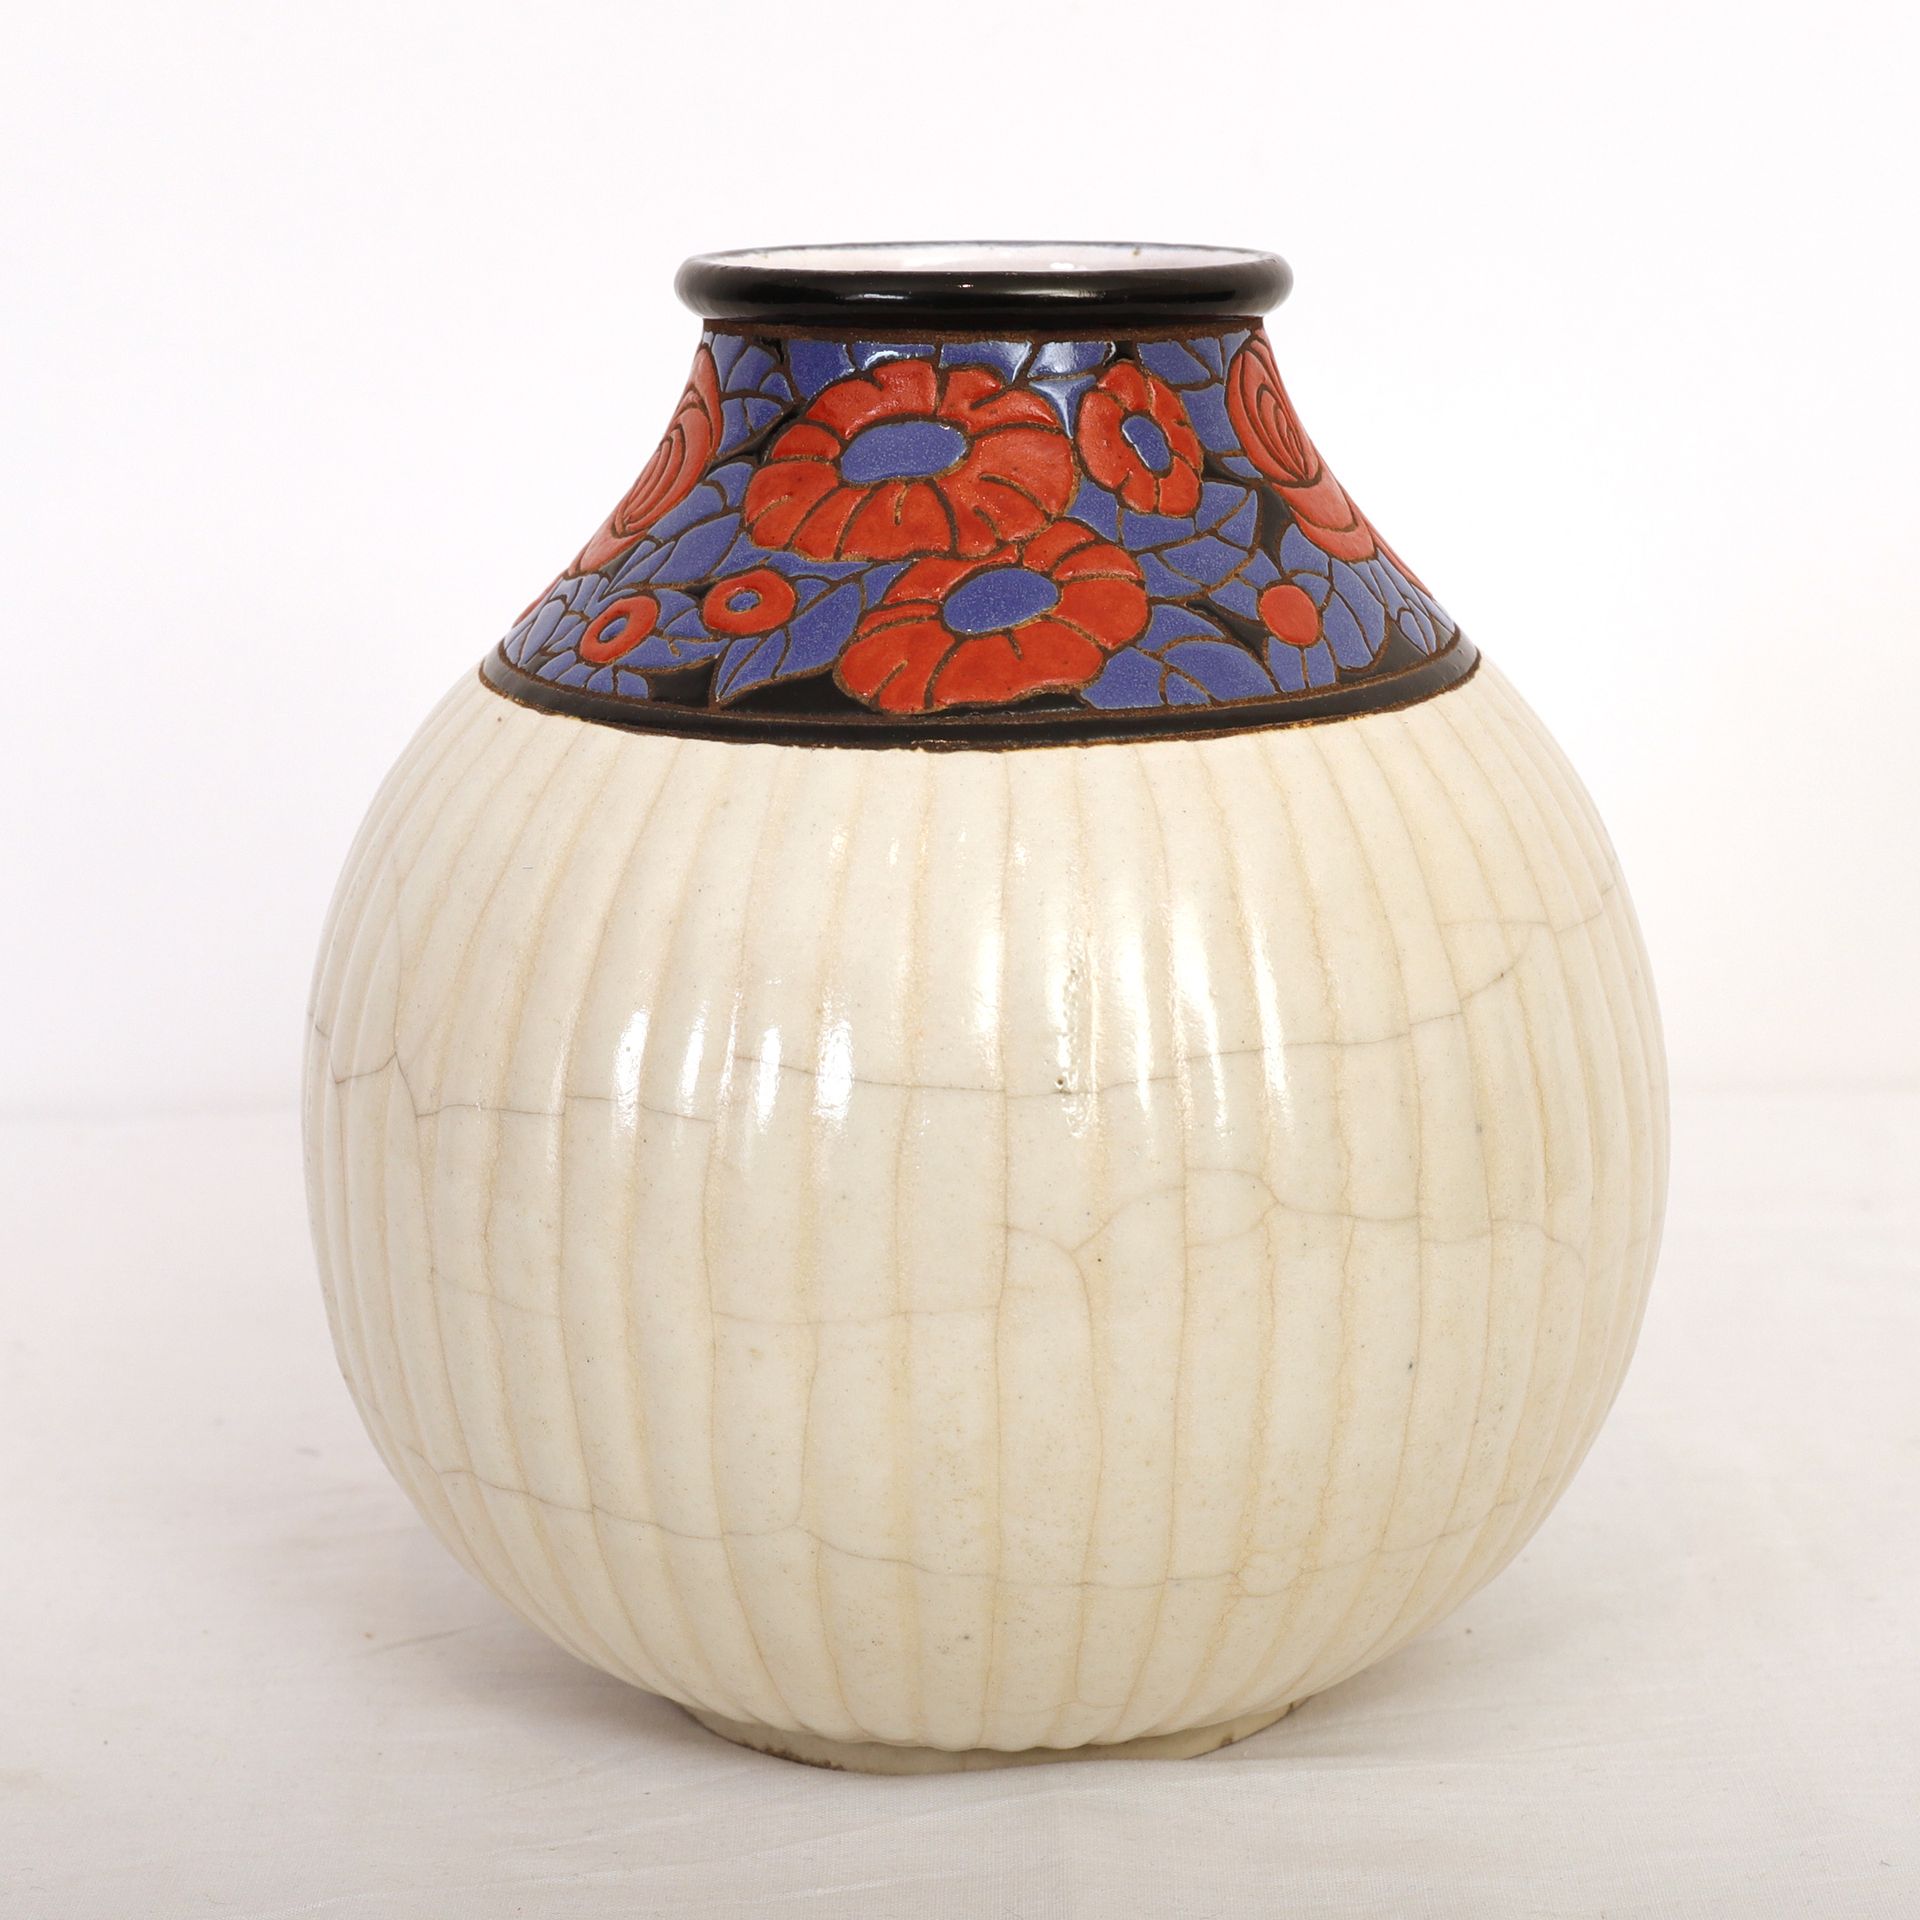 Null 装饰艺术的陶瓷球花瓶

饰有蓝色和红色的风格化花朵楣板

高度：22厘米